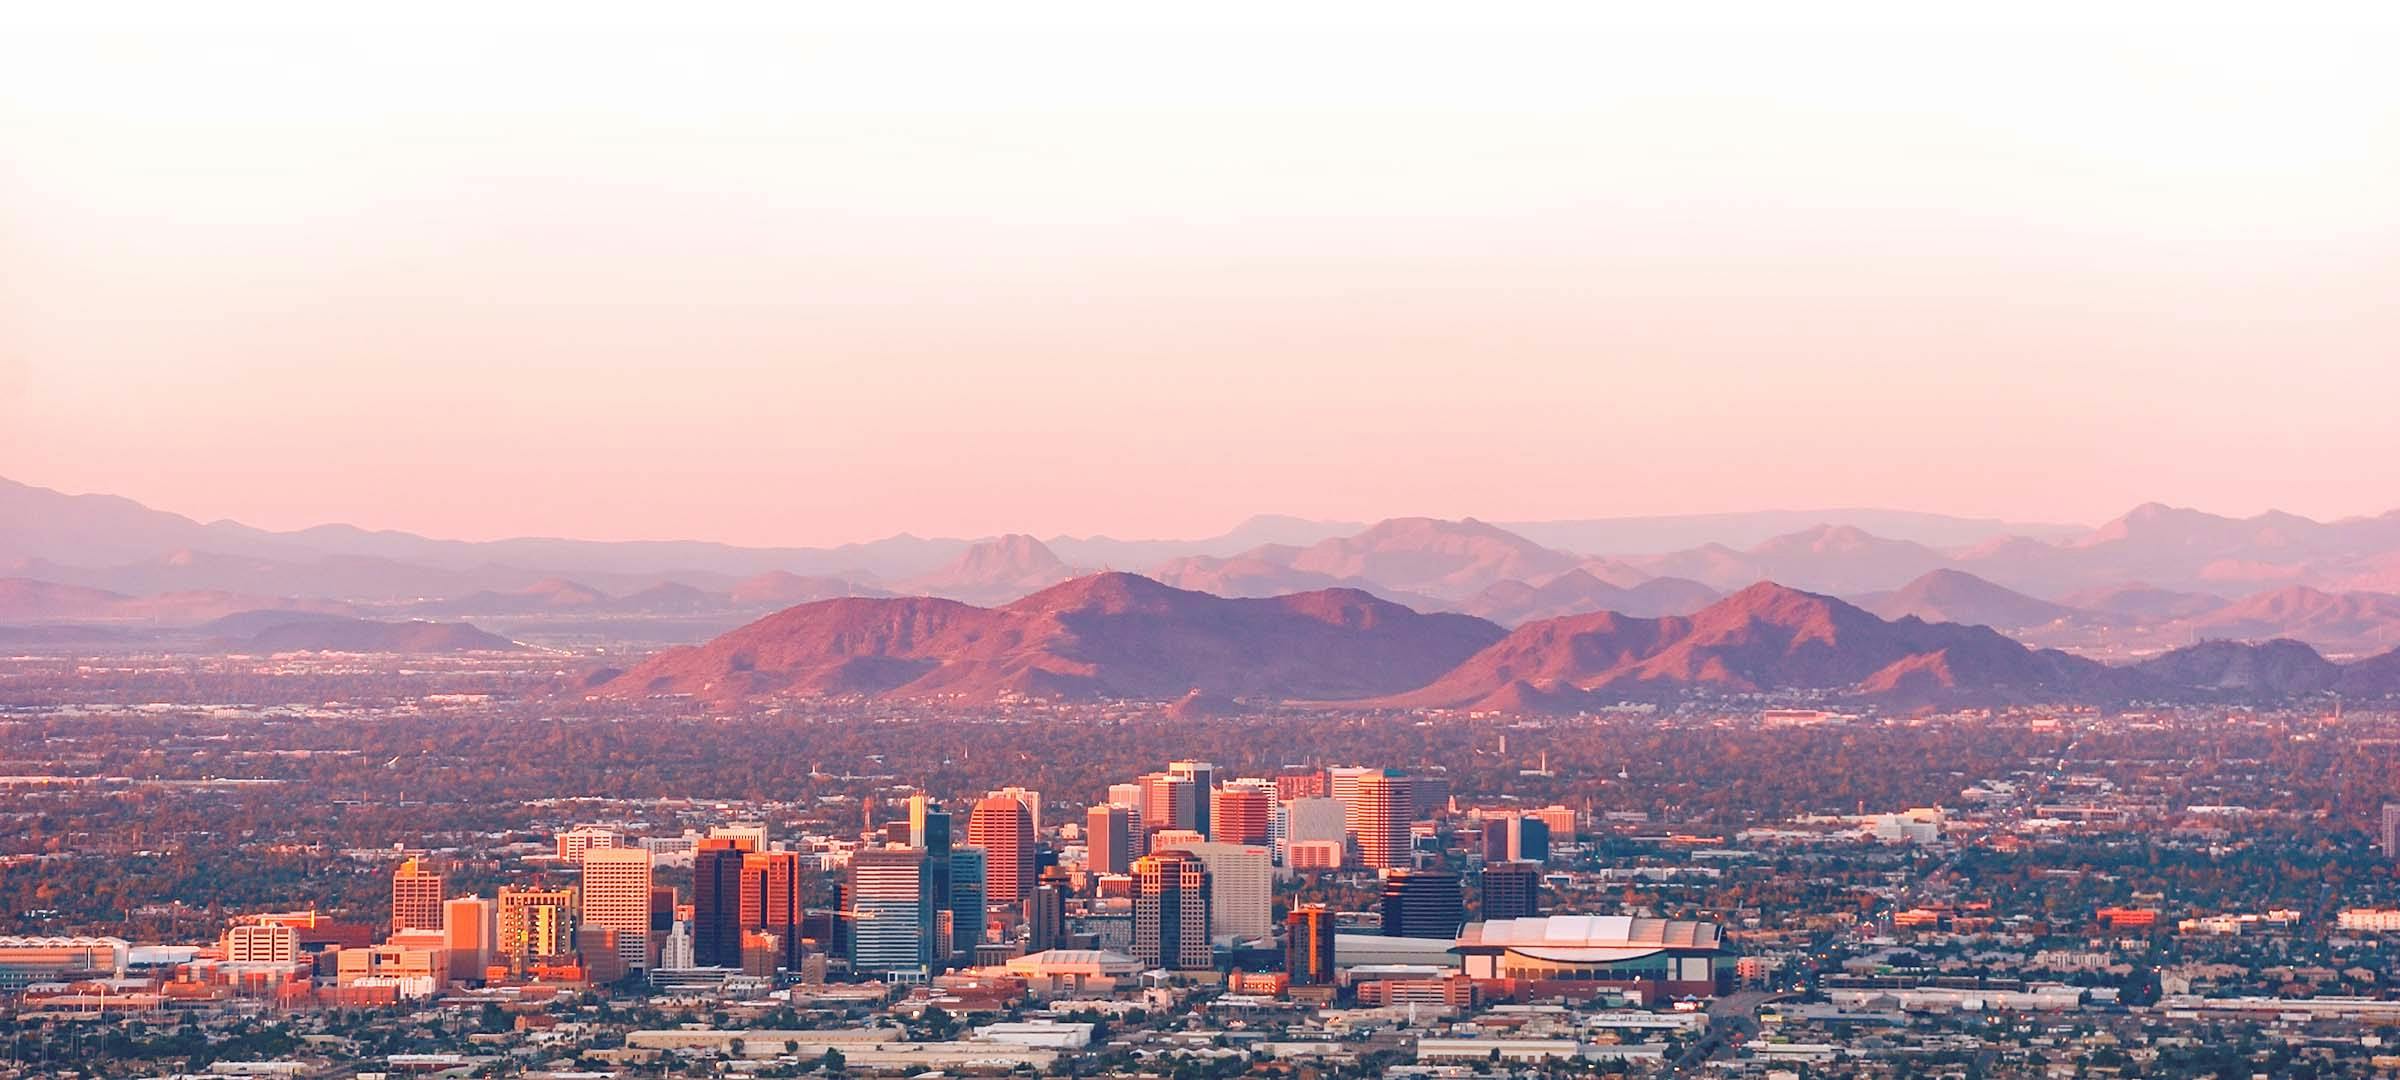 Skyline view of Phoenix